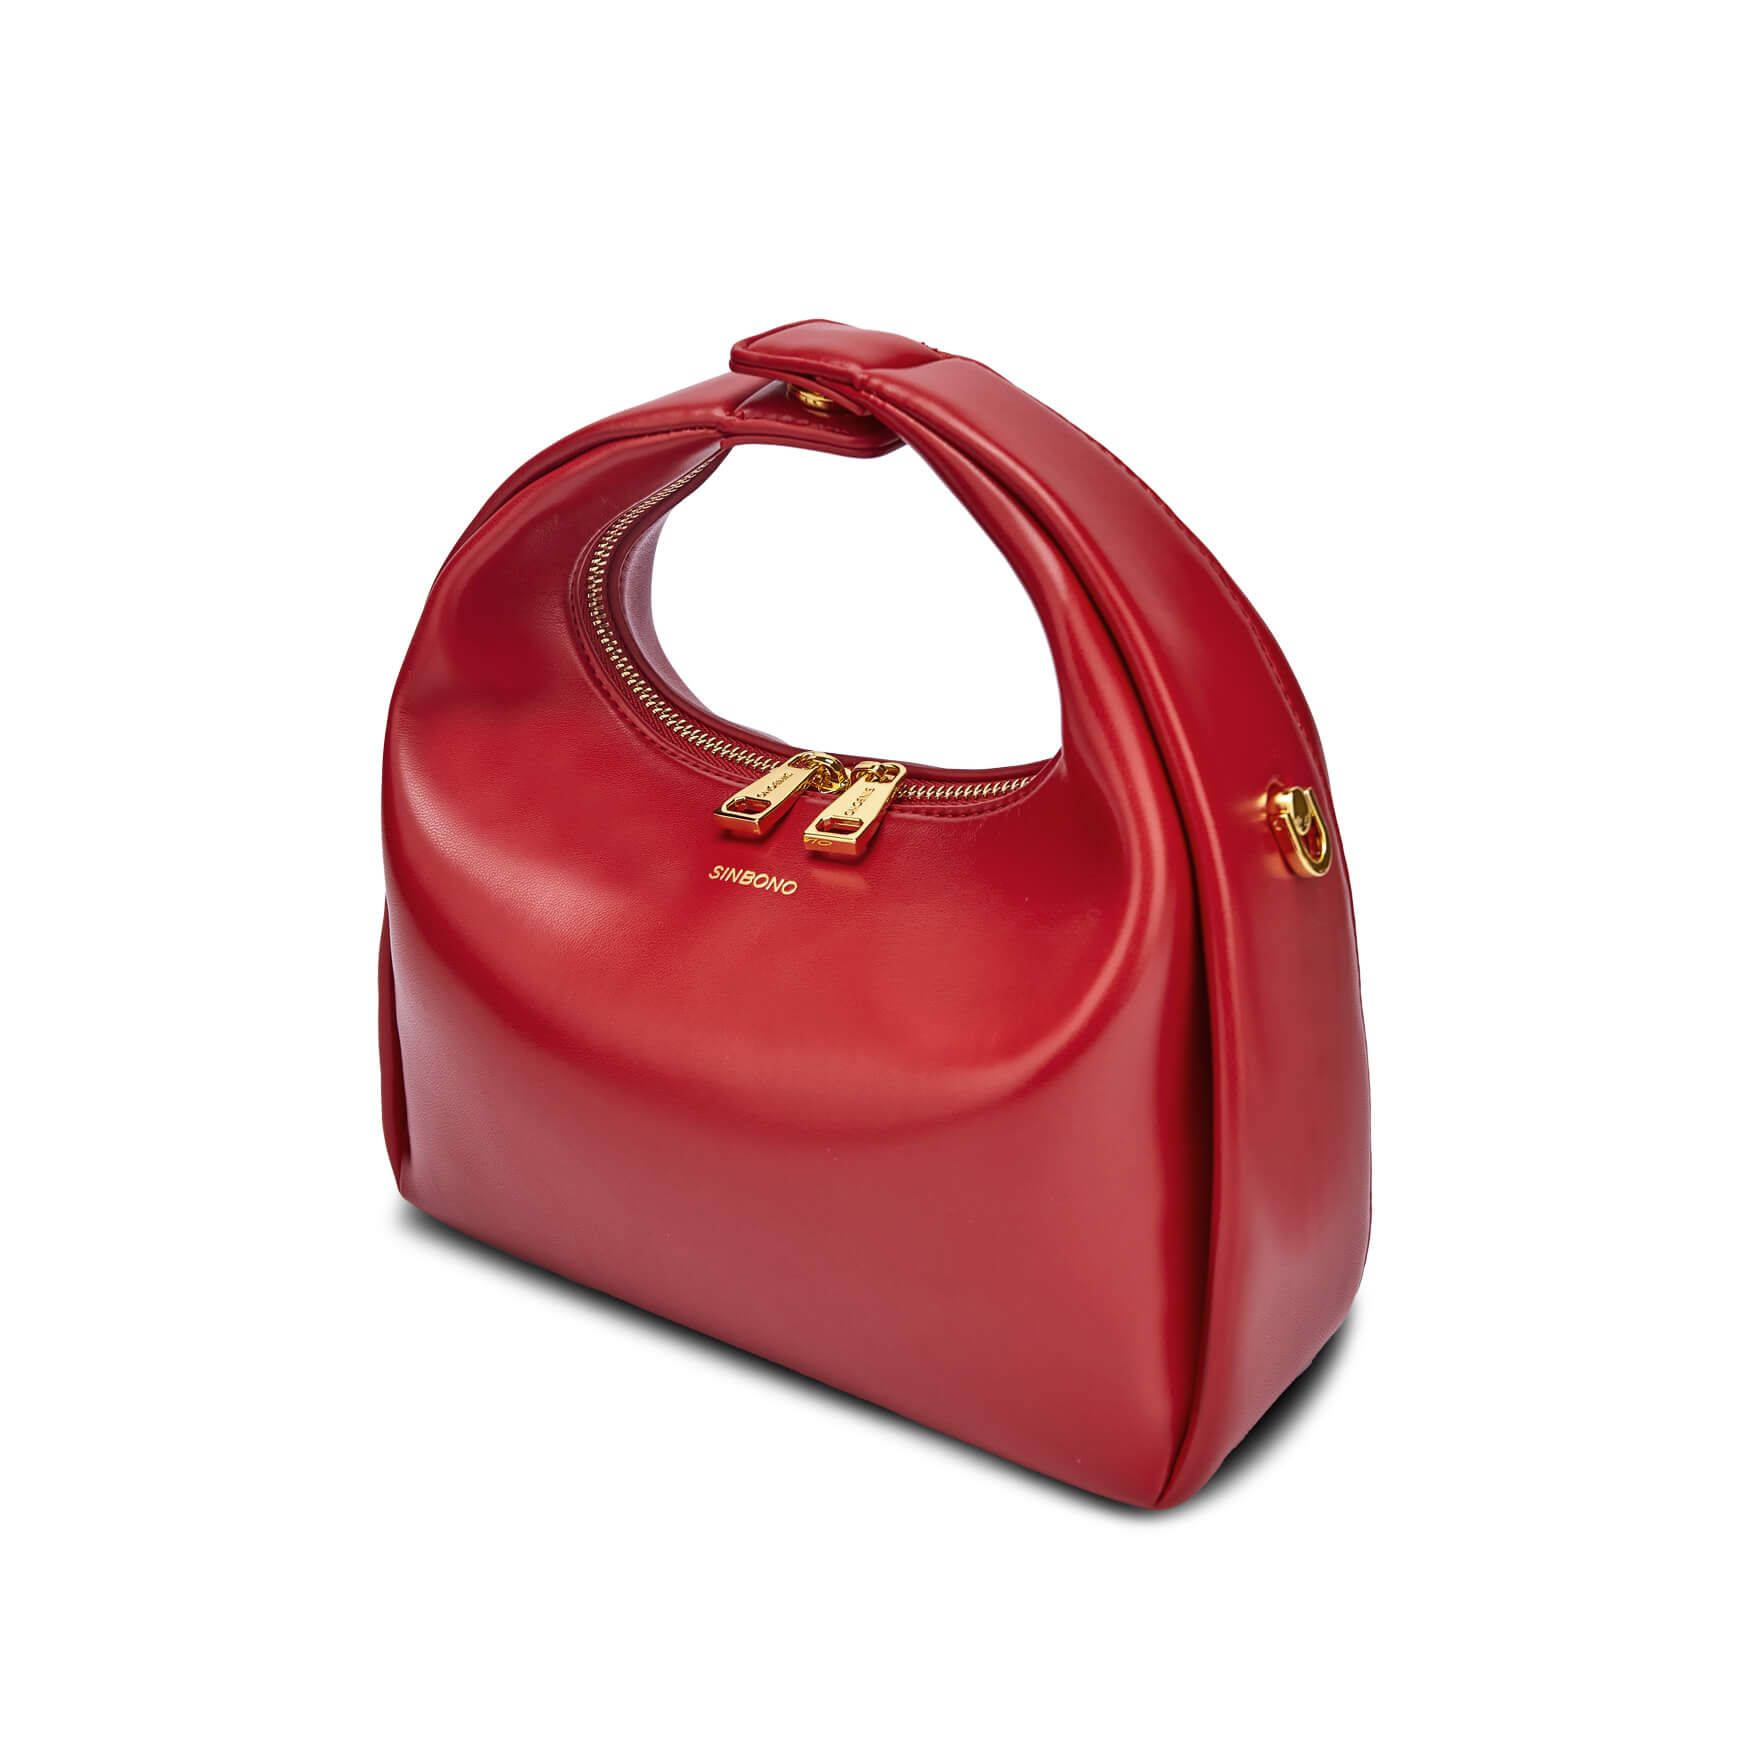 Buy ROSS BROWN Synthetic Leather Women's Satchel Bag | Ladies Purse Handbag  | Women bags -Mini (Green) at Amazon.in